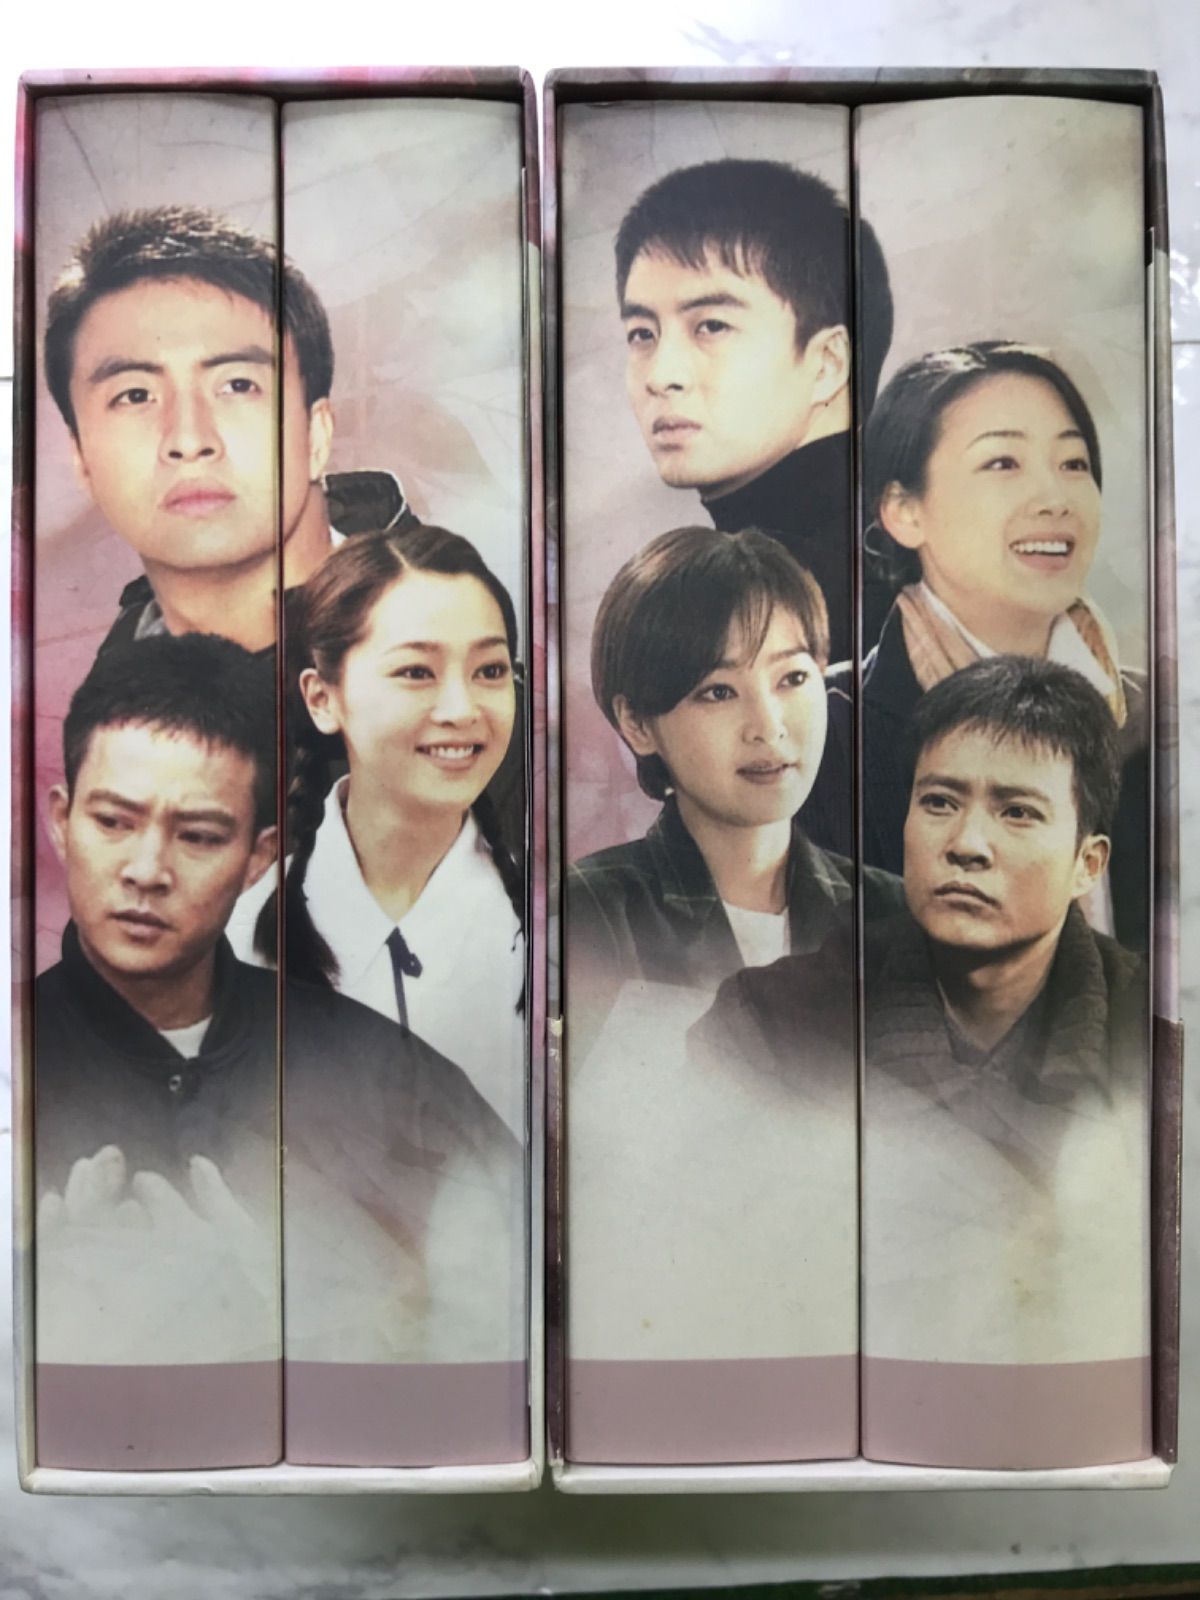 CDDVD初恋 DVD-BOX Ⅰ,Ⅱ,Ⅲ 全22枚 全巻全話 完結 ペ・ヨンジュン主演 